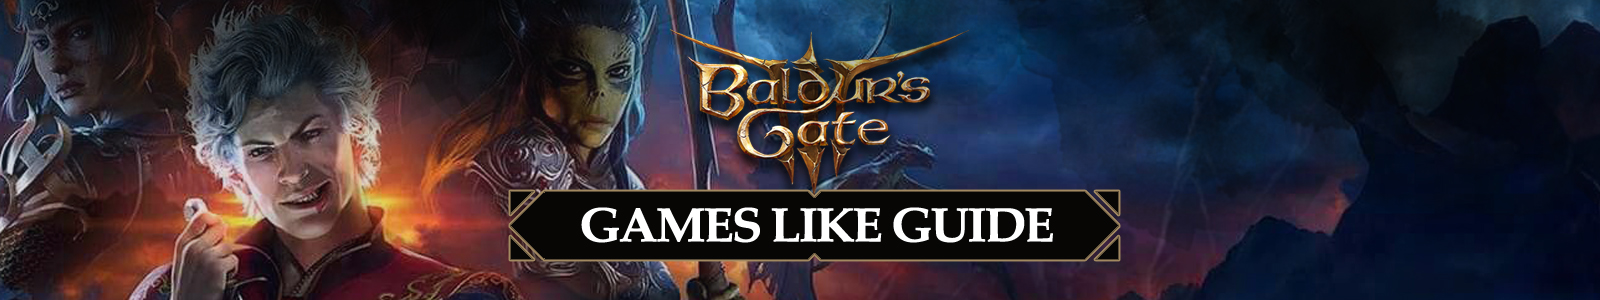 Guía de juegos similares a Baldurs Gate 3